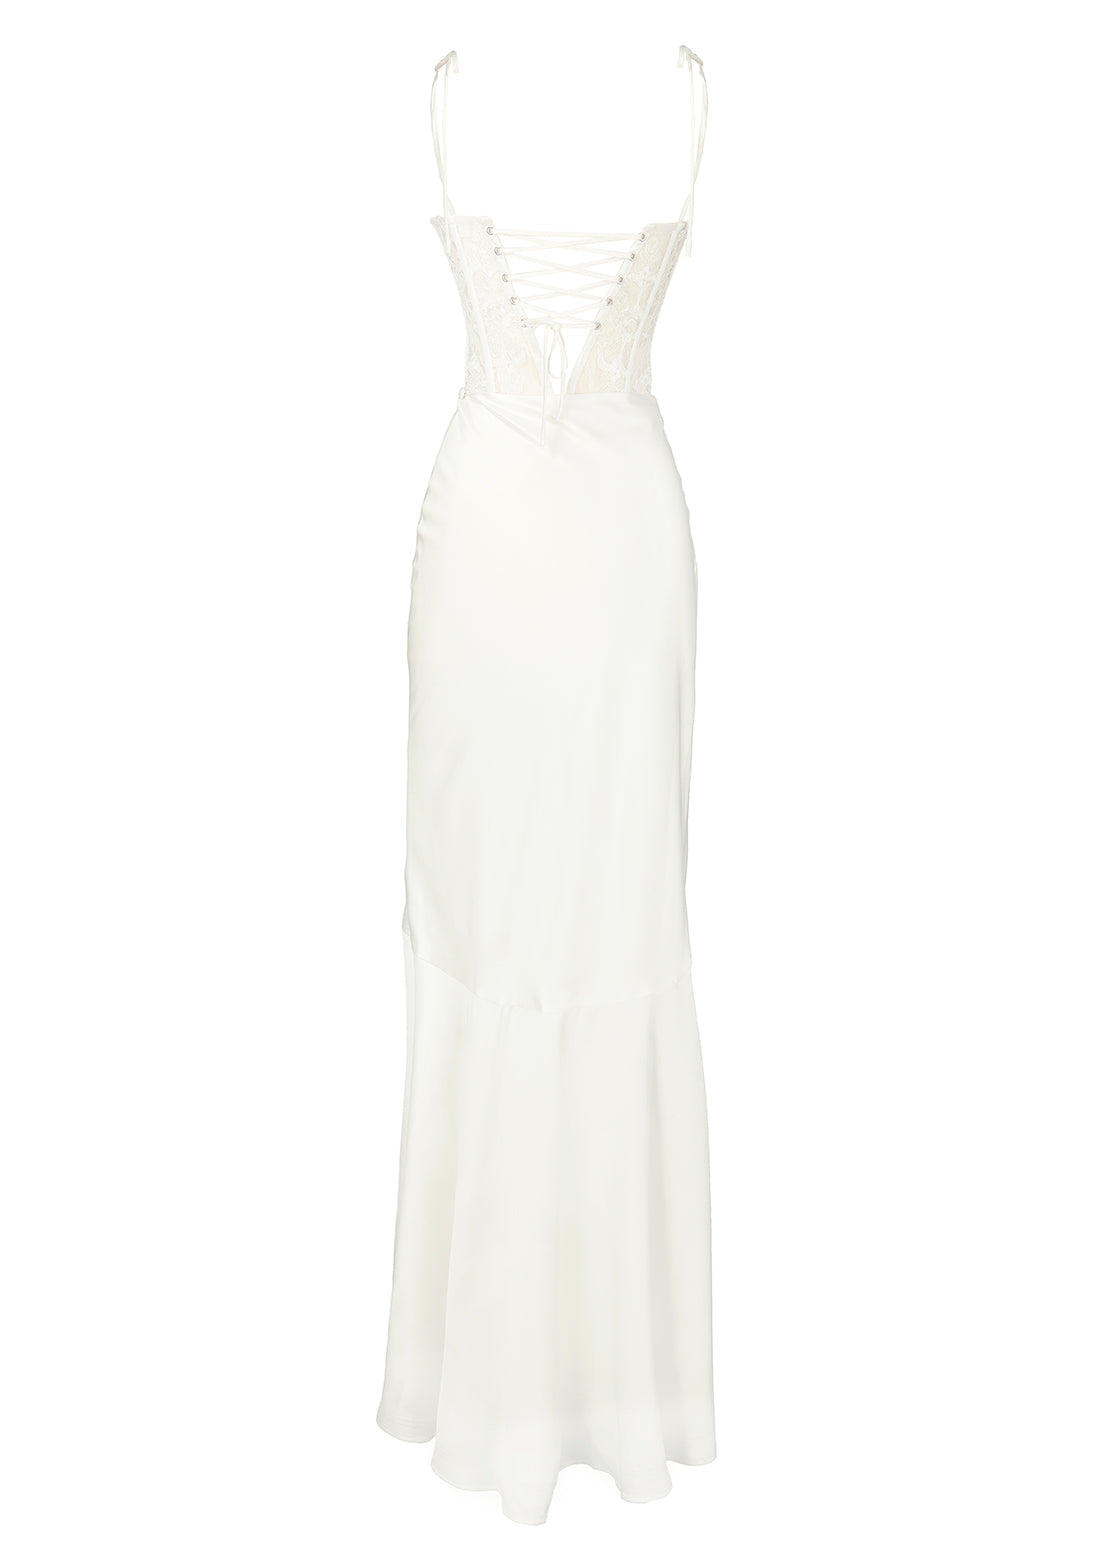 The Calla Lily Dress in White